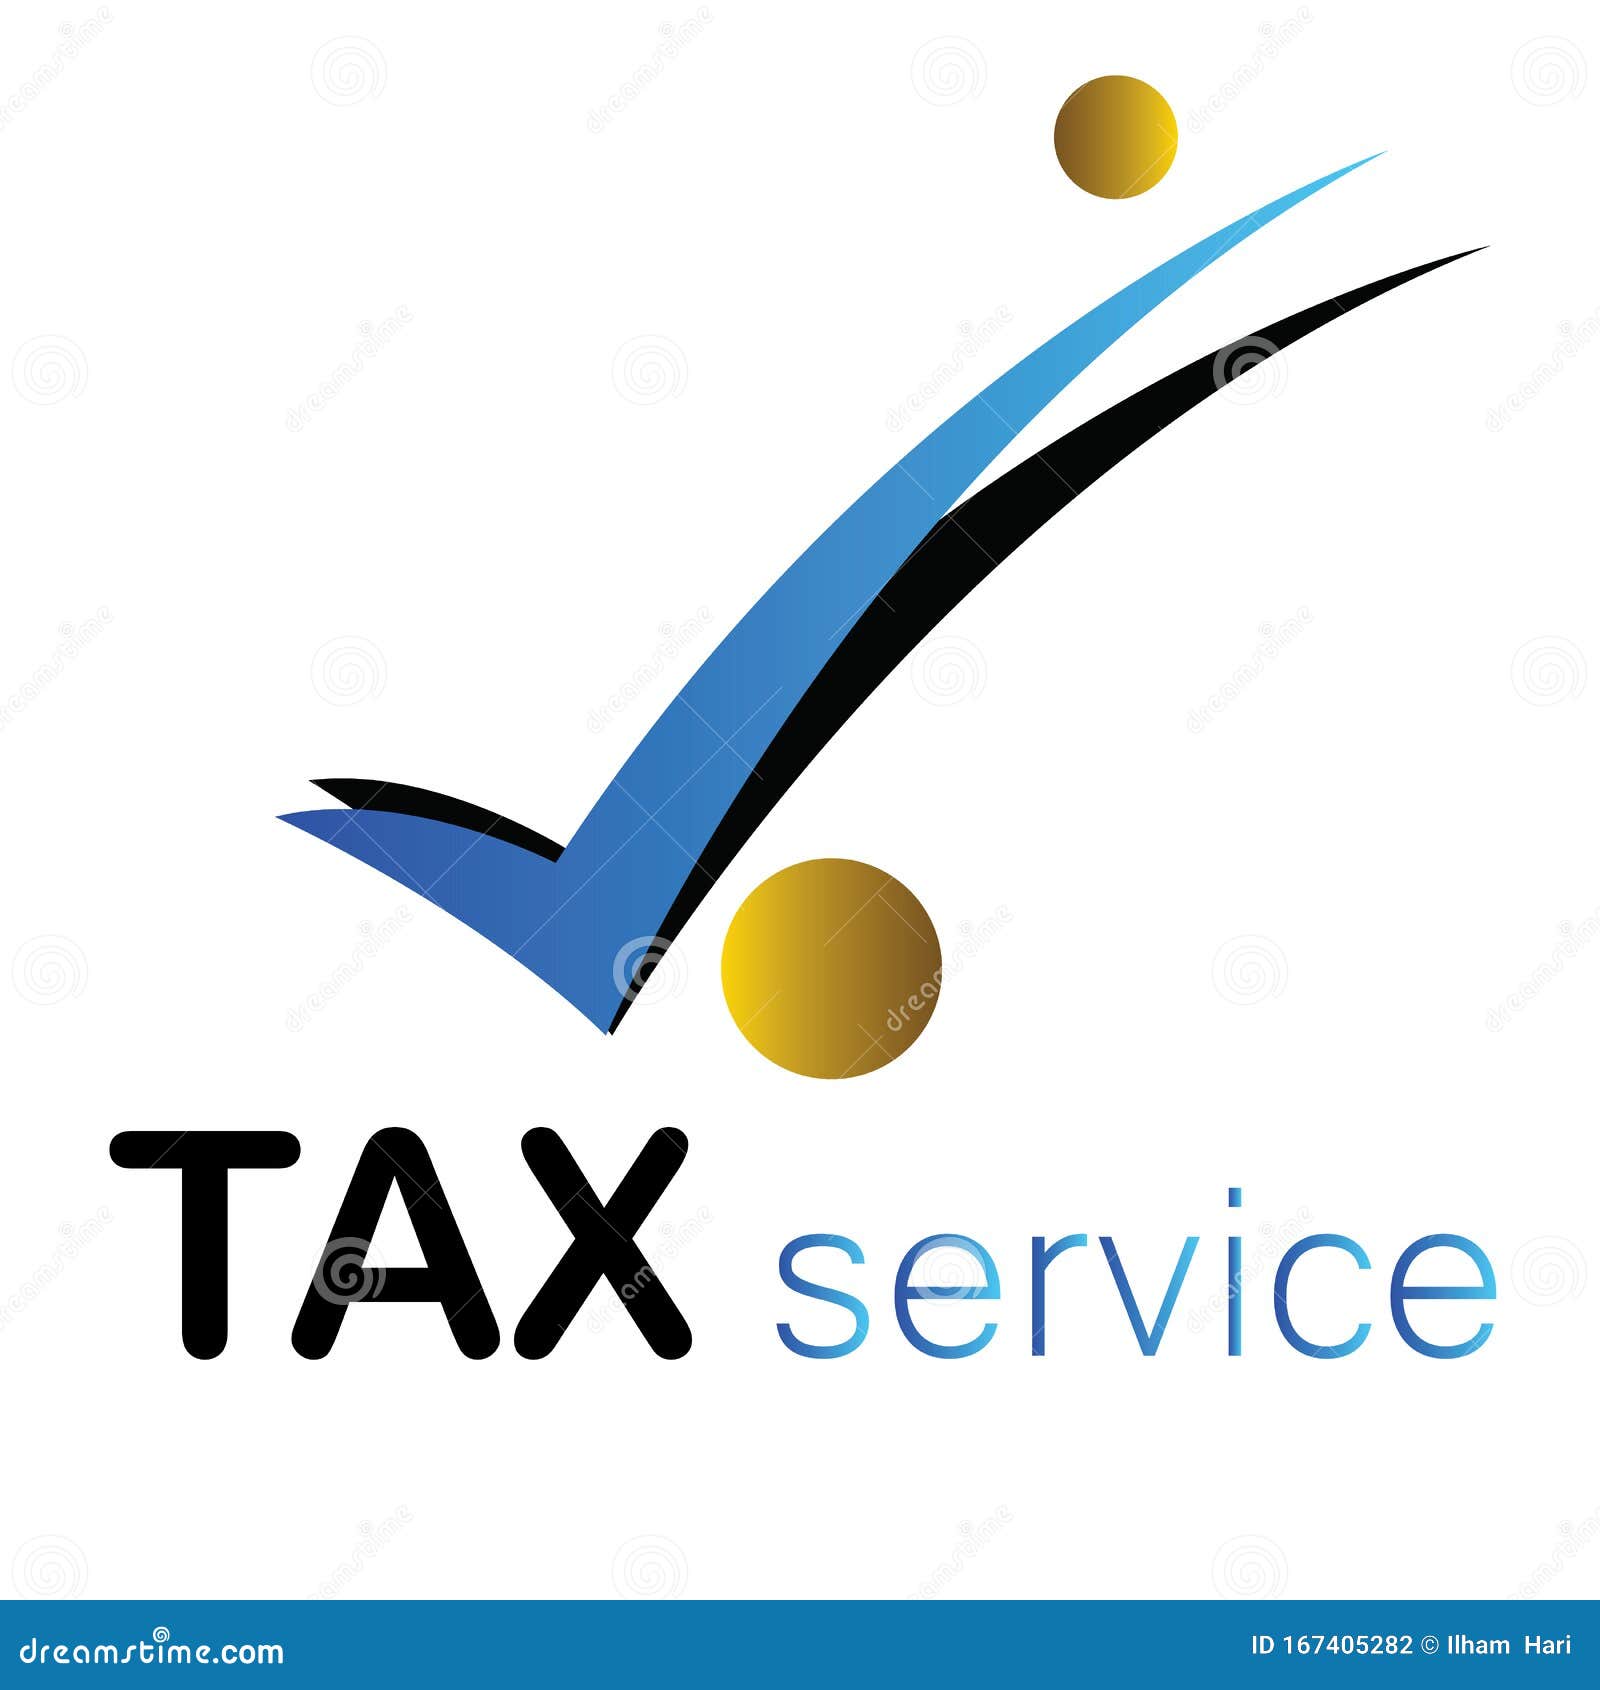 tax logo ideas 1